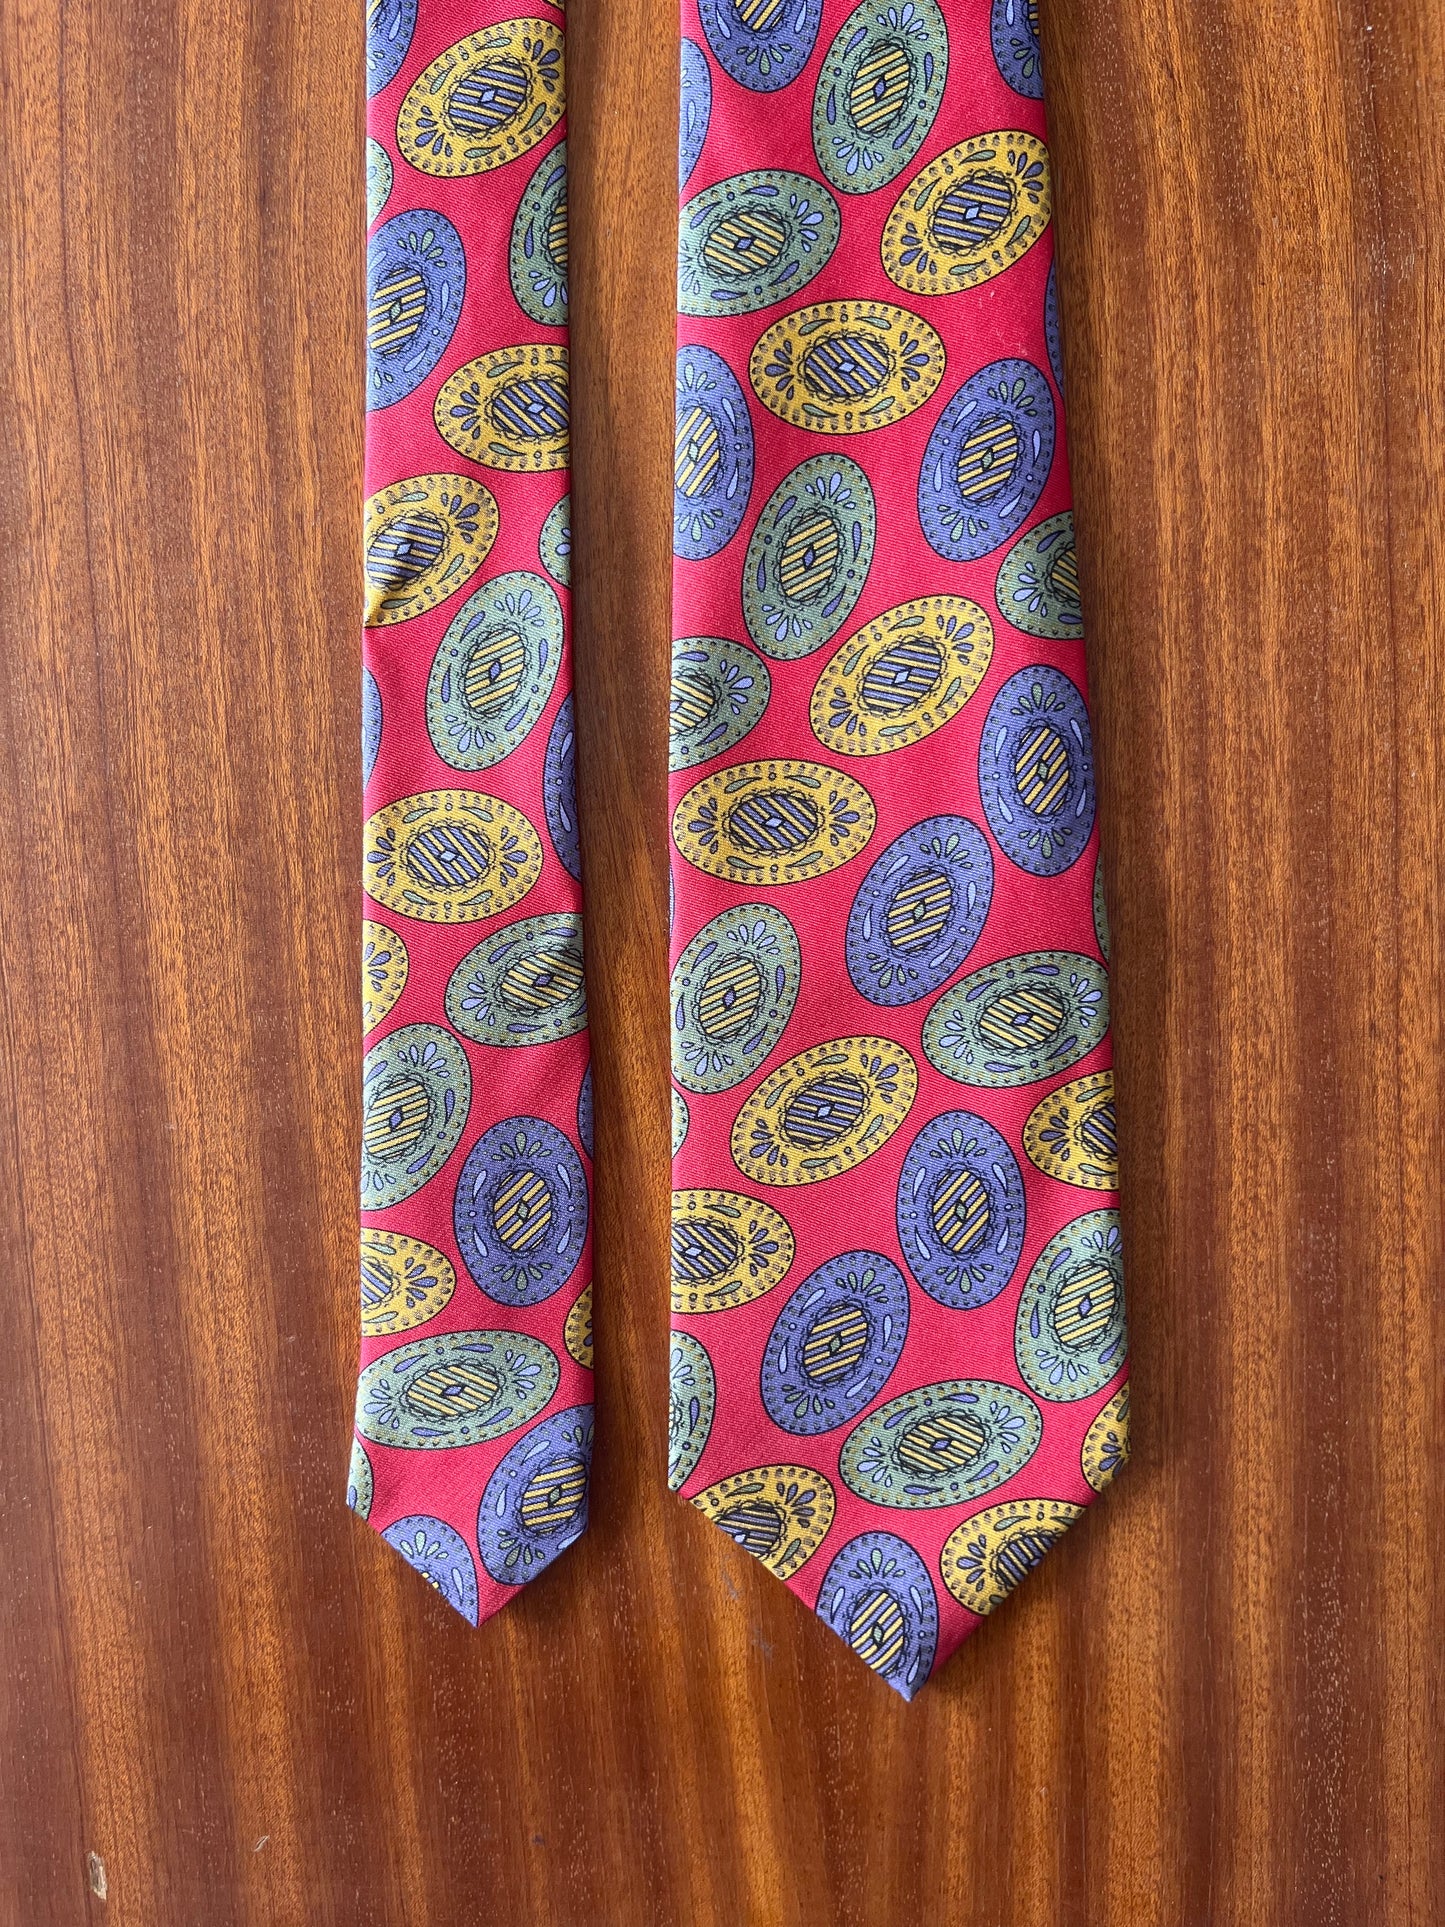 Cravatta anni ‘90 medaglioni